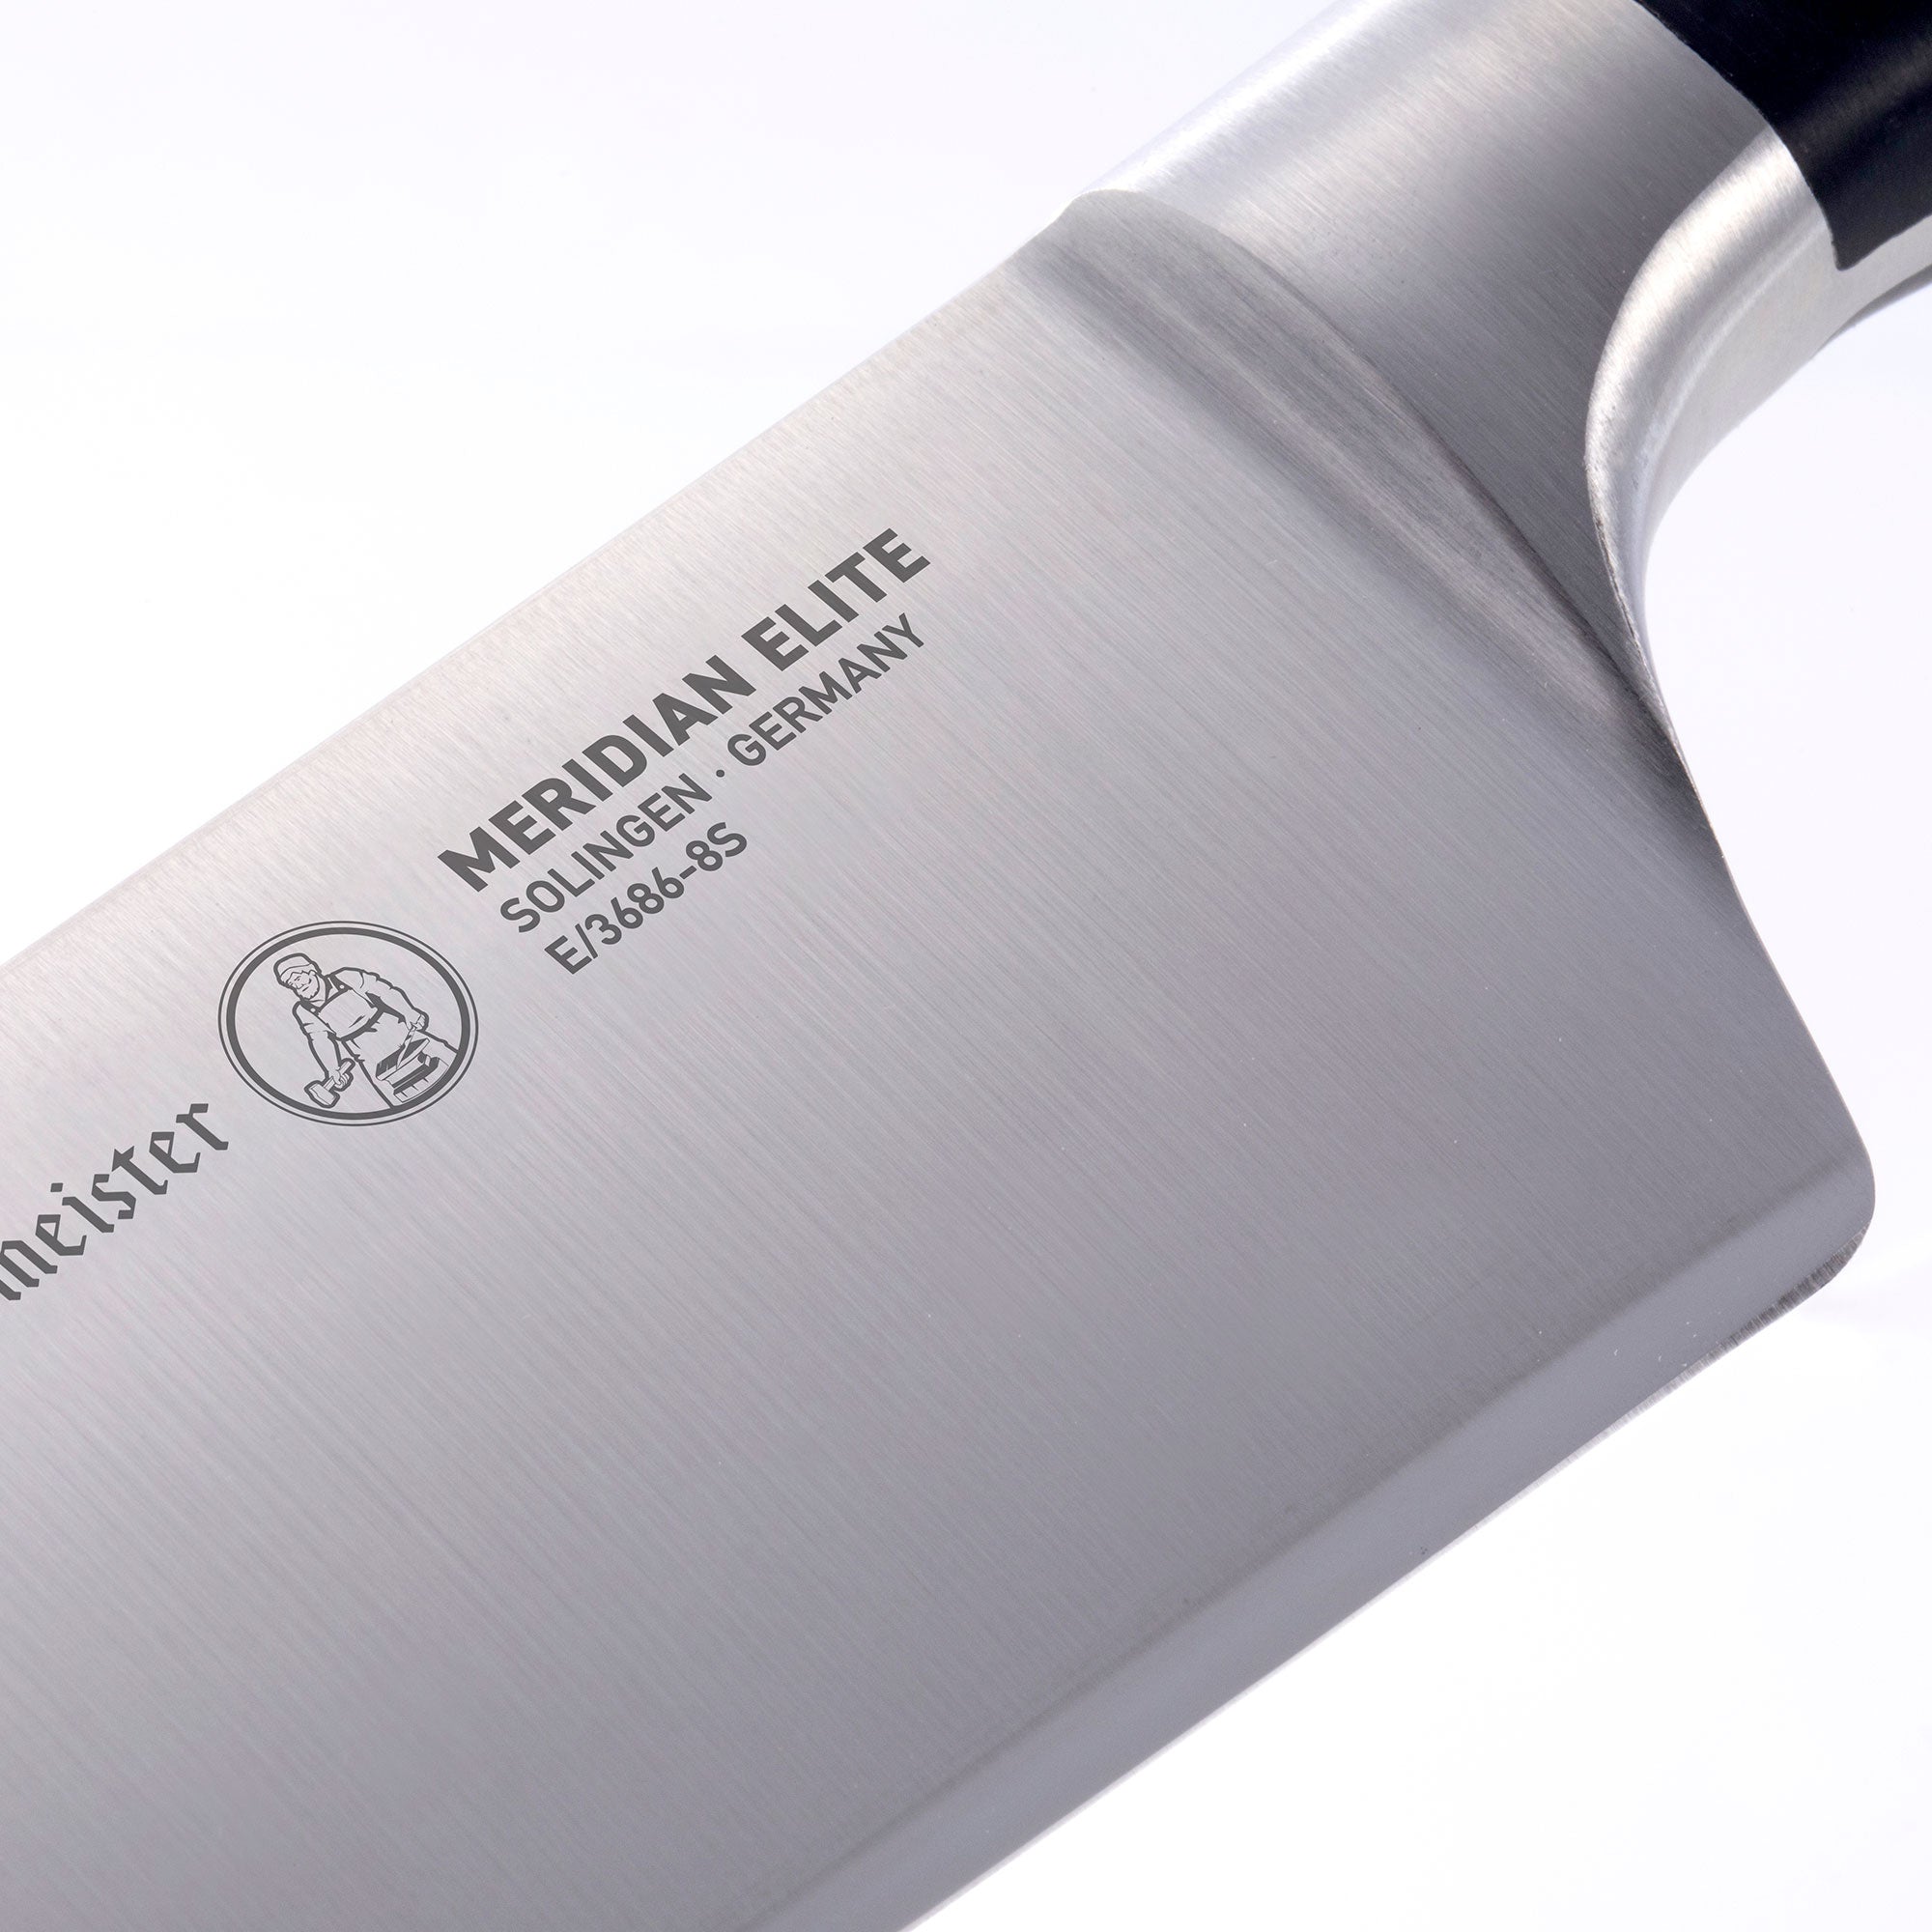 Meridian Elite 10 inch Chef's knife Messermeister